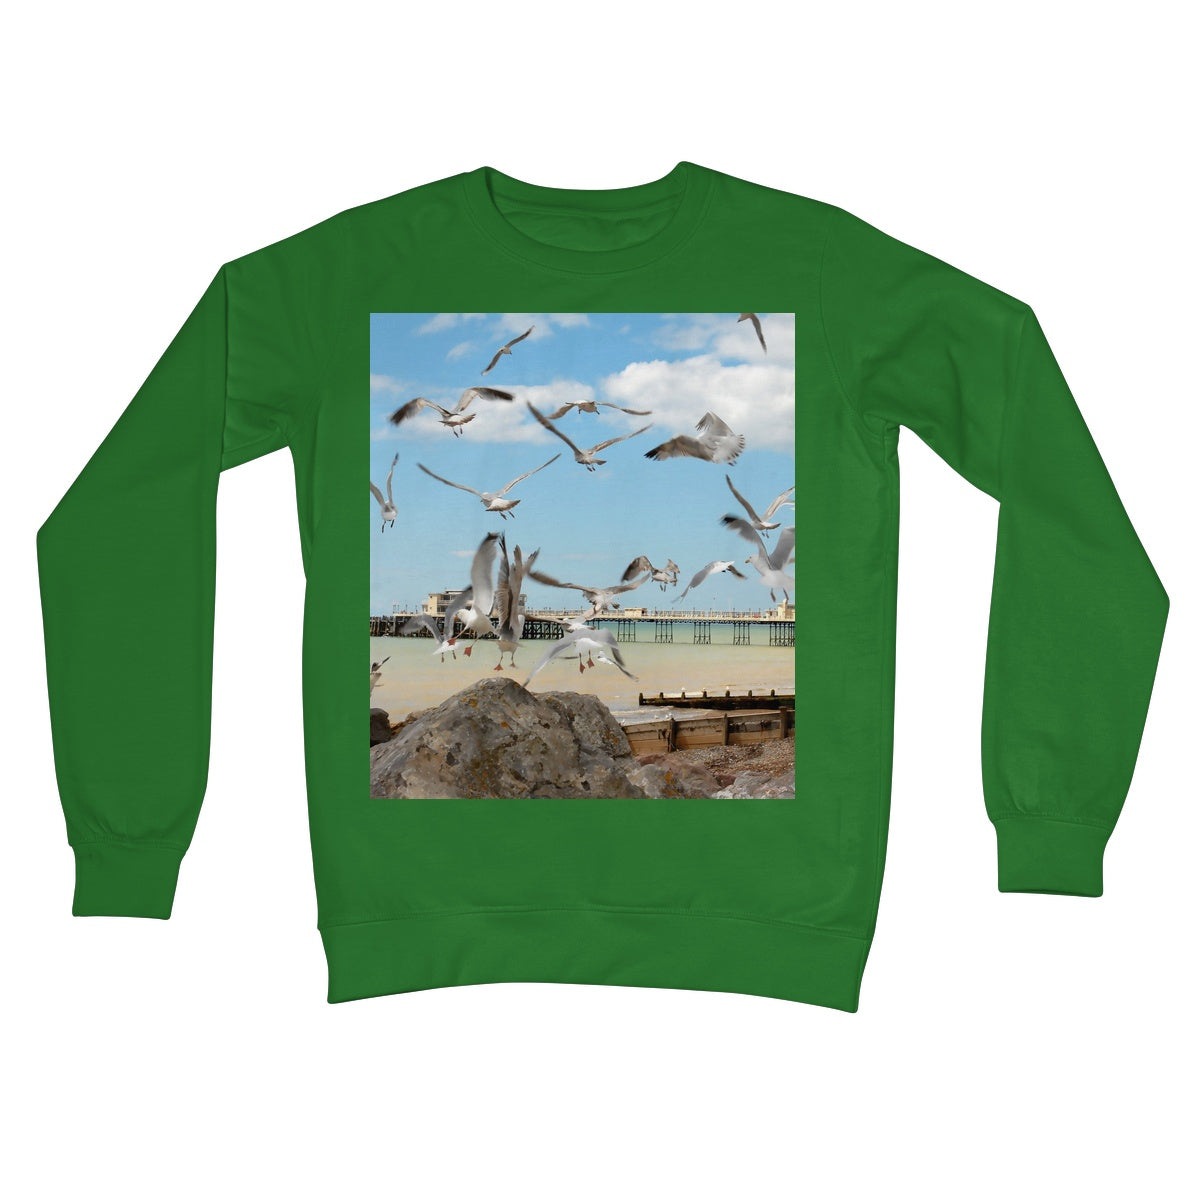 Seagulls At Feeding Time By David Sawyer Crew Neck Sweatshirt